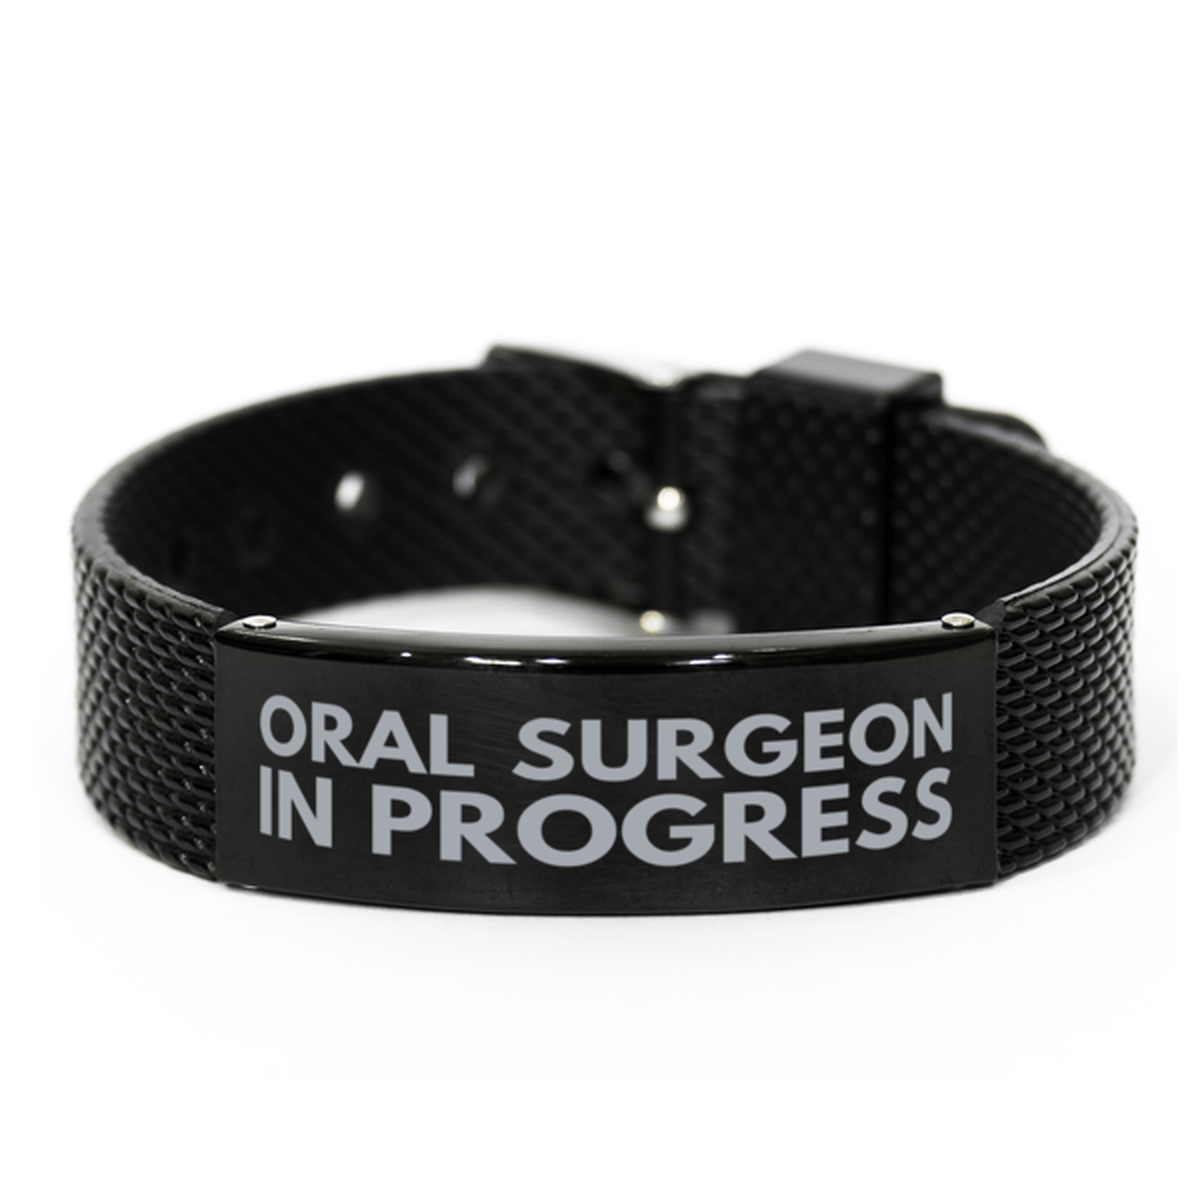 Inspirational Oral Surgeon Black Shark Mesh Bracelet, Oral Surgeon In Progress, Best Graduation Gifts for Students